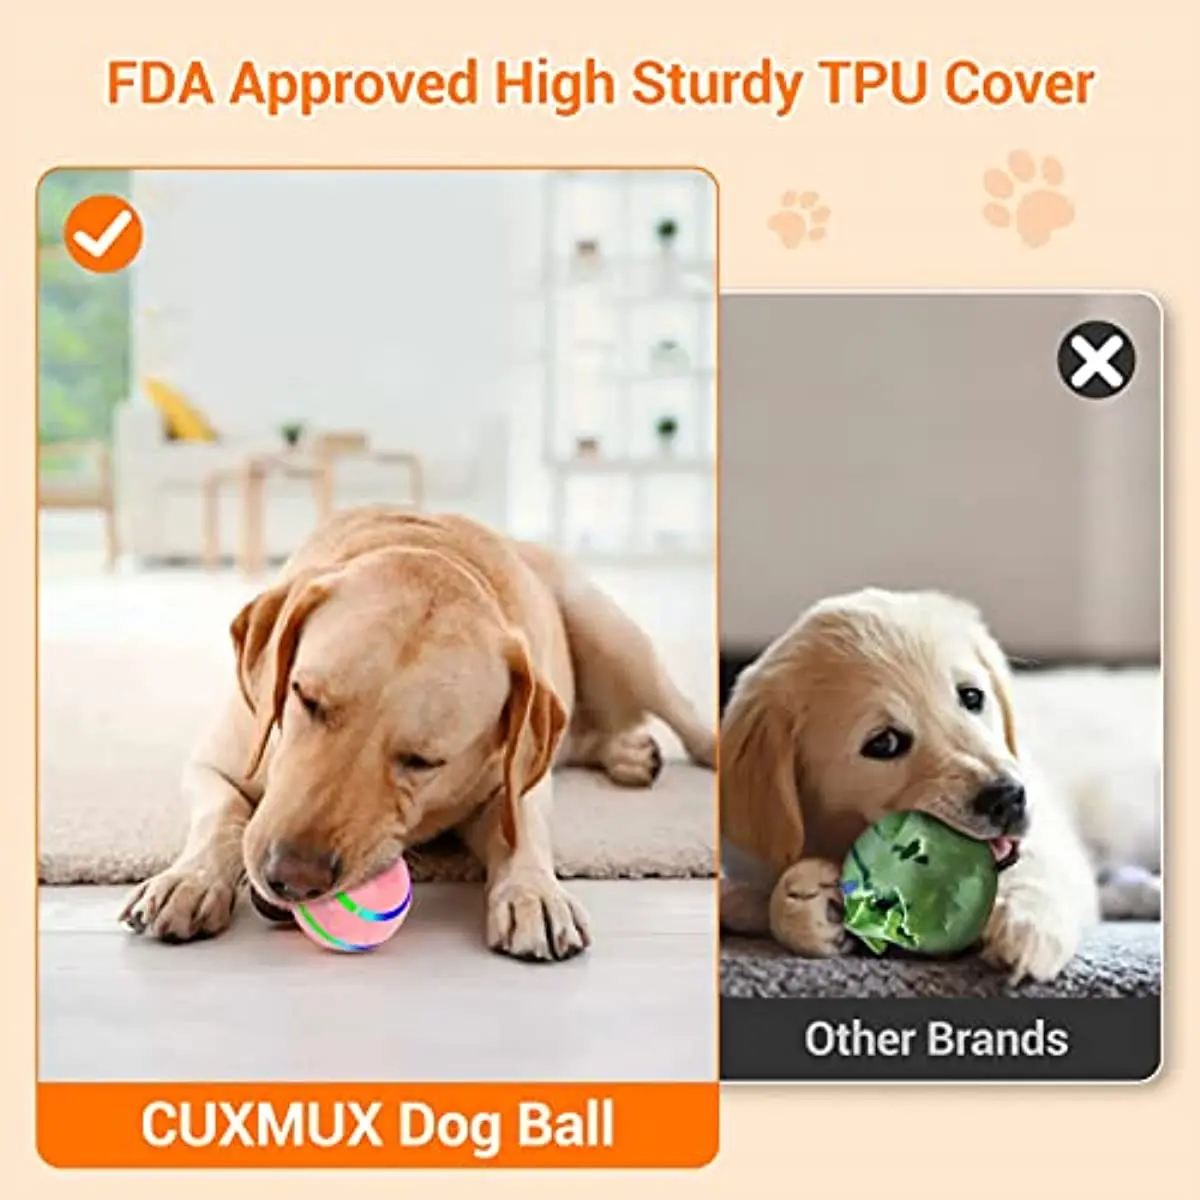 FDA Approved High Sturdy TPU Cover